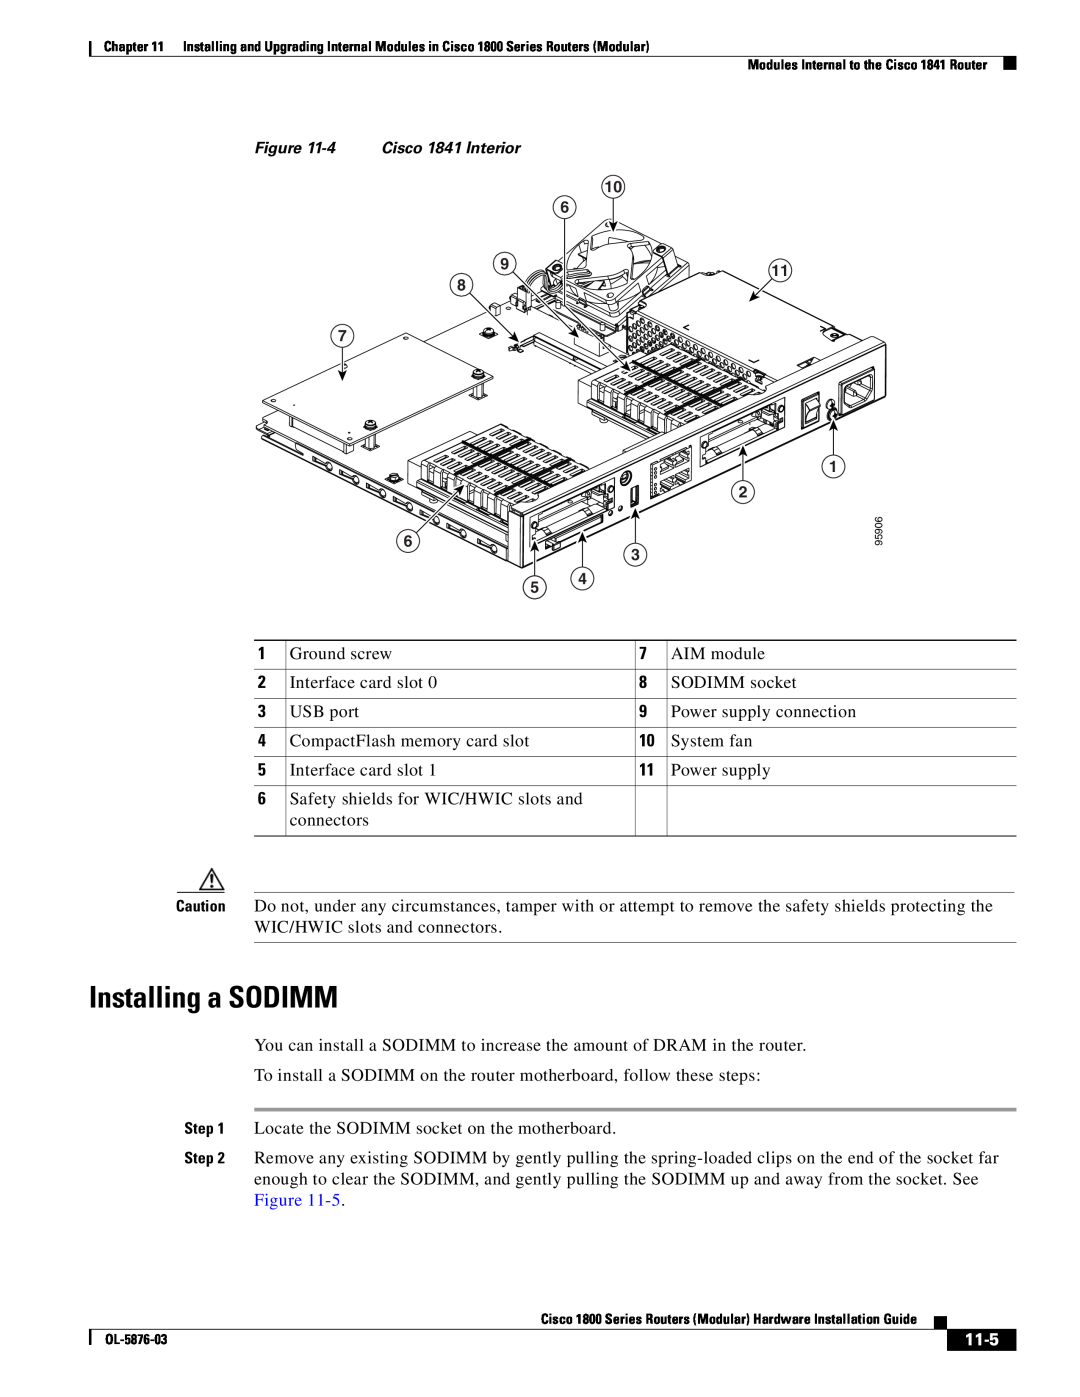 Cisco Systems CISCO1841-HSEC/K9-RF manual Installing a SODIMM, 11-5, 4 Cisco 1841 Interior 